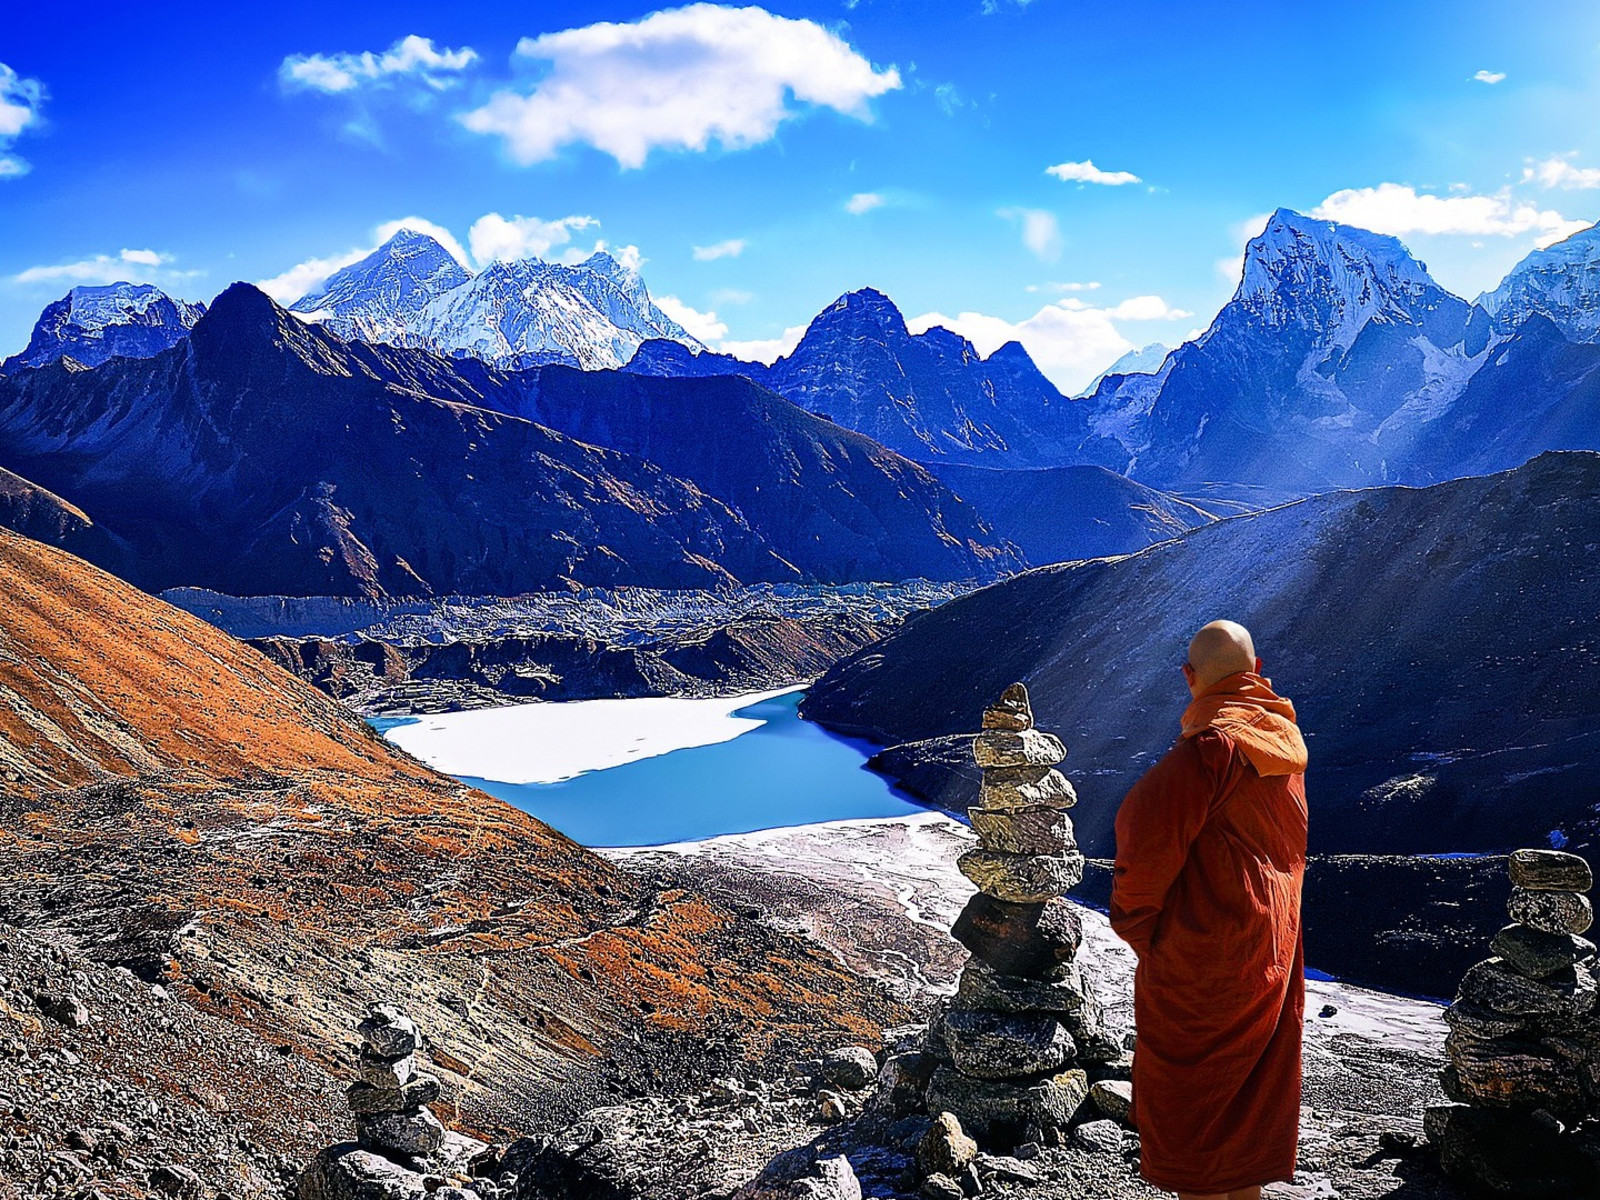 Гималаи море. Тибет Гималаи, Джомолунгма, Эверест))). Гималаи Непал Тибет. Тибет Гималаи Лхаса. Непал Эверест.